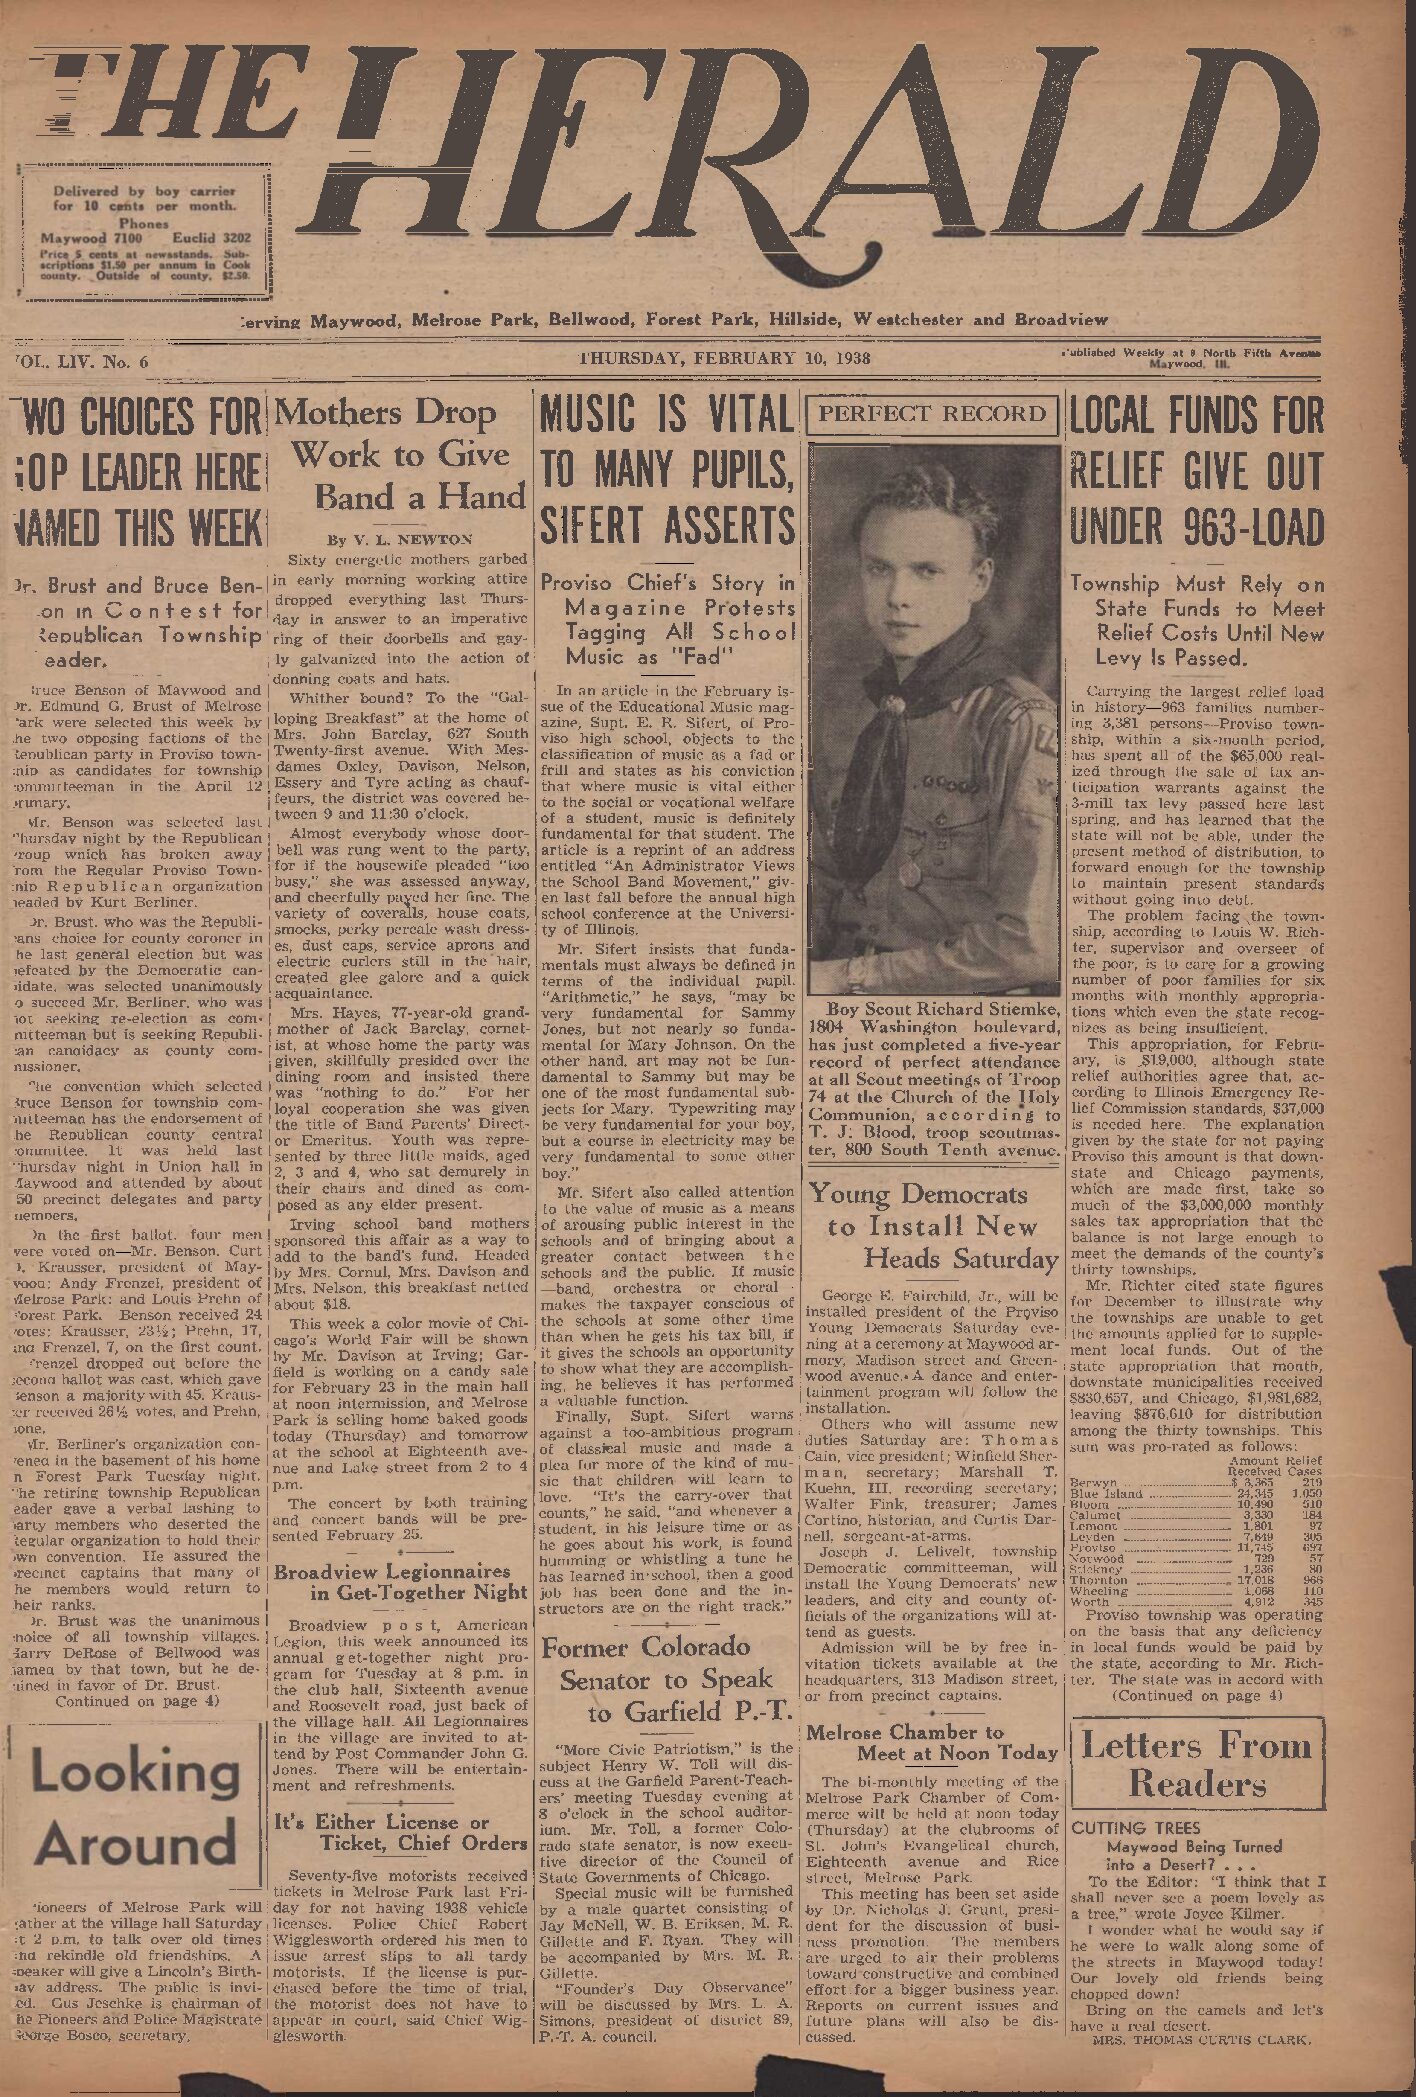 The Herald – 19380210